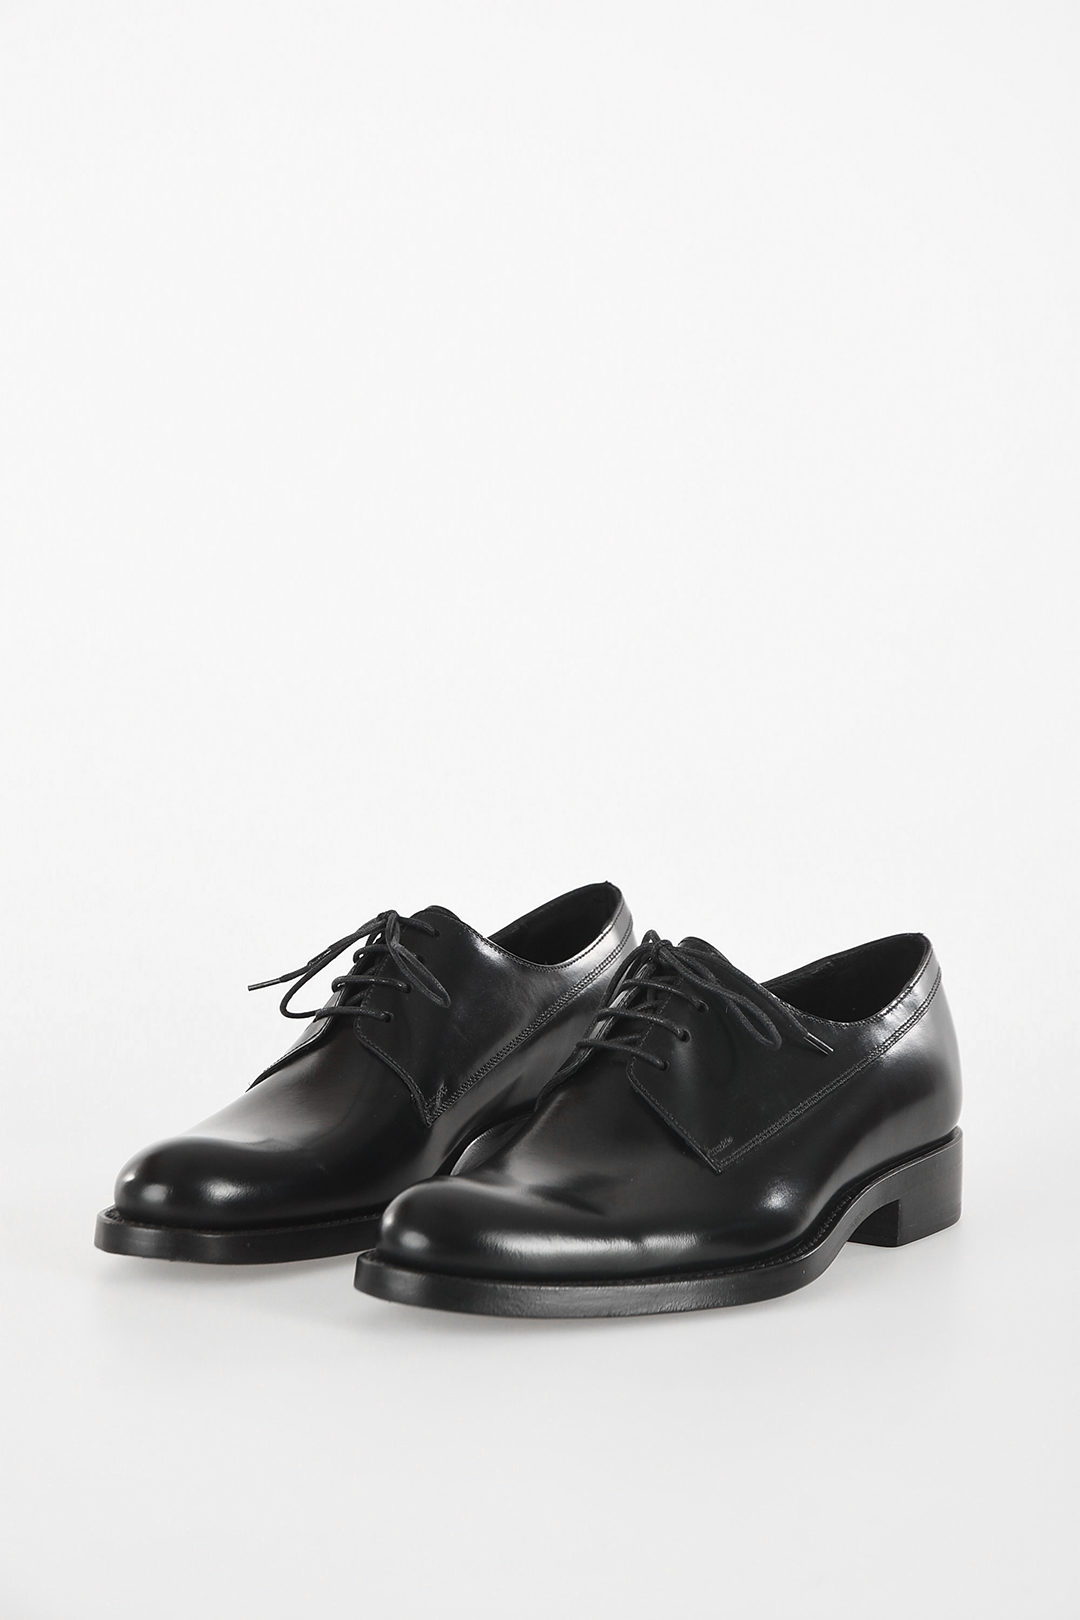 Dior Leather Derby Shoes men - Glamood Outlet